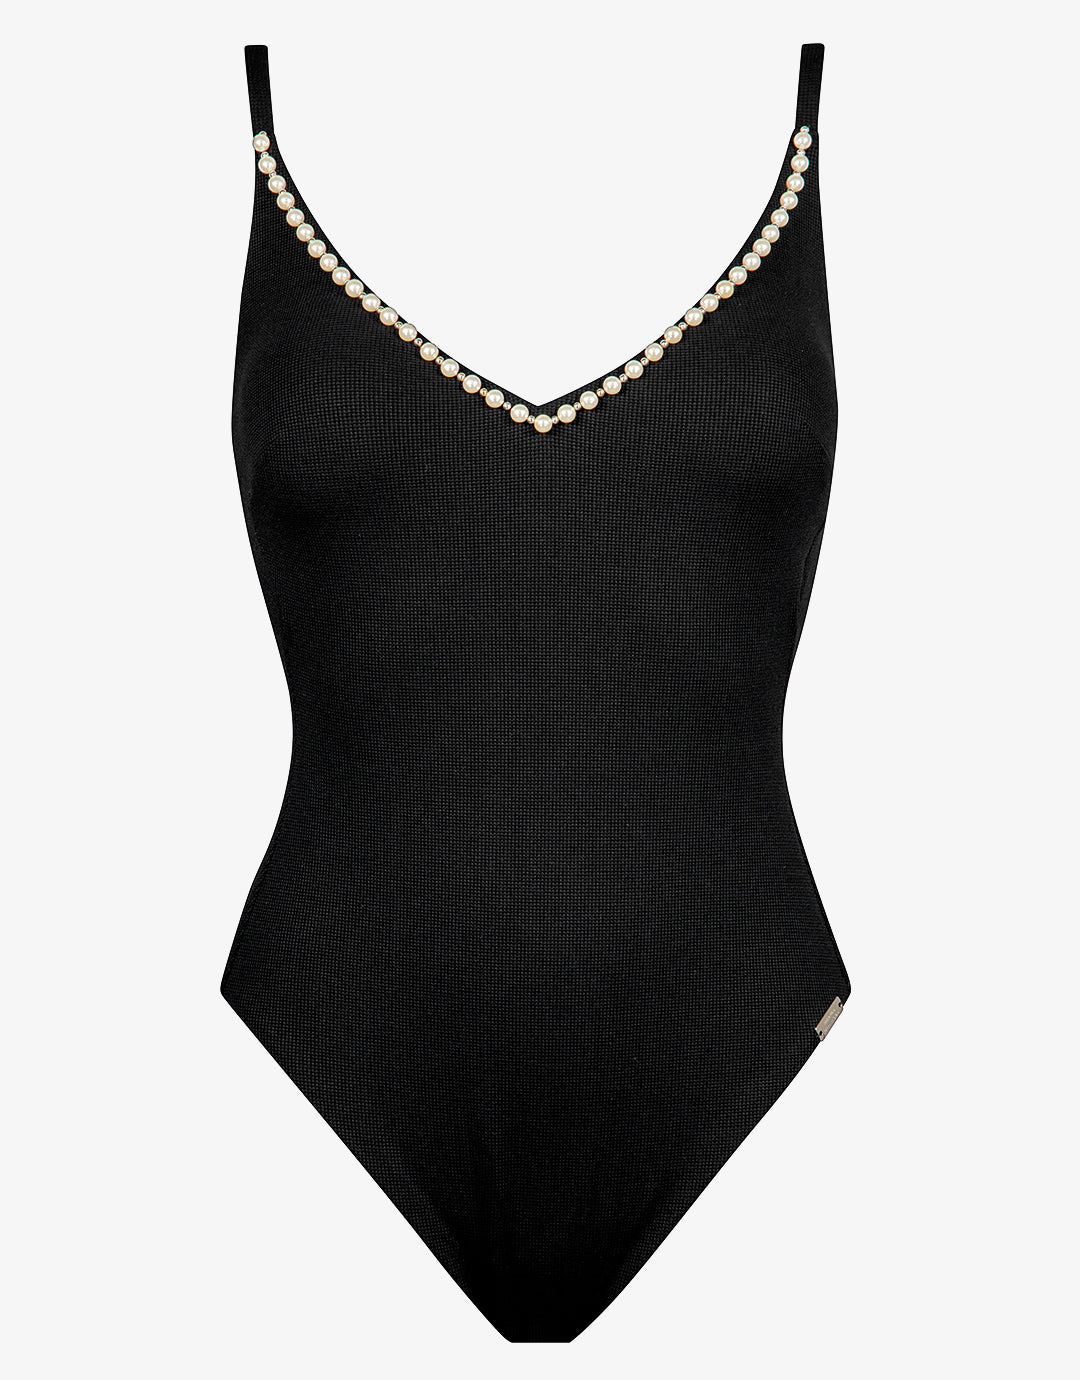 Pearl Swimsuit - Black - Simply Beach UK